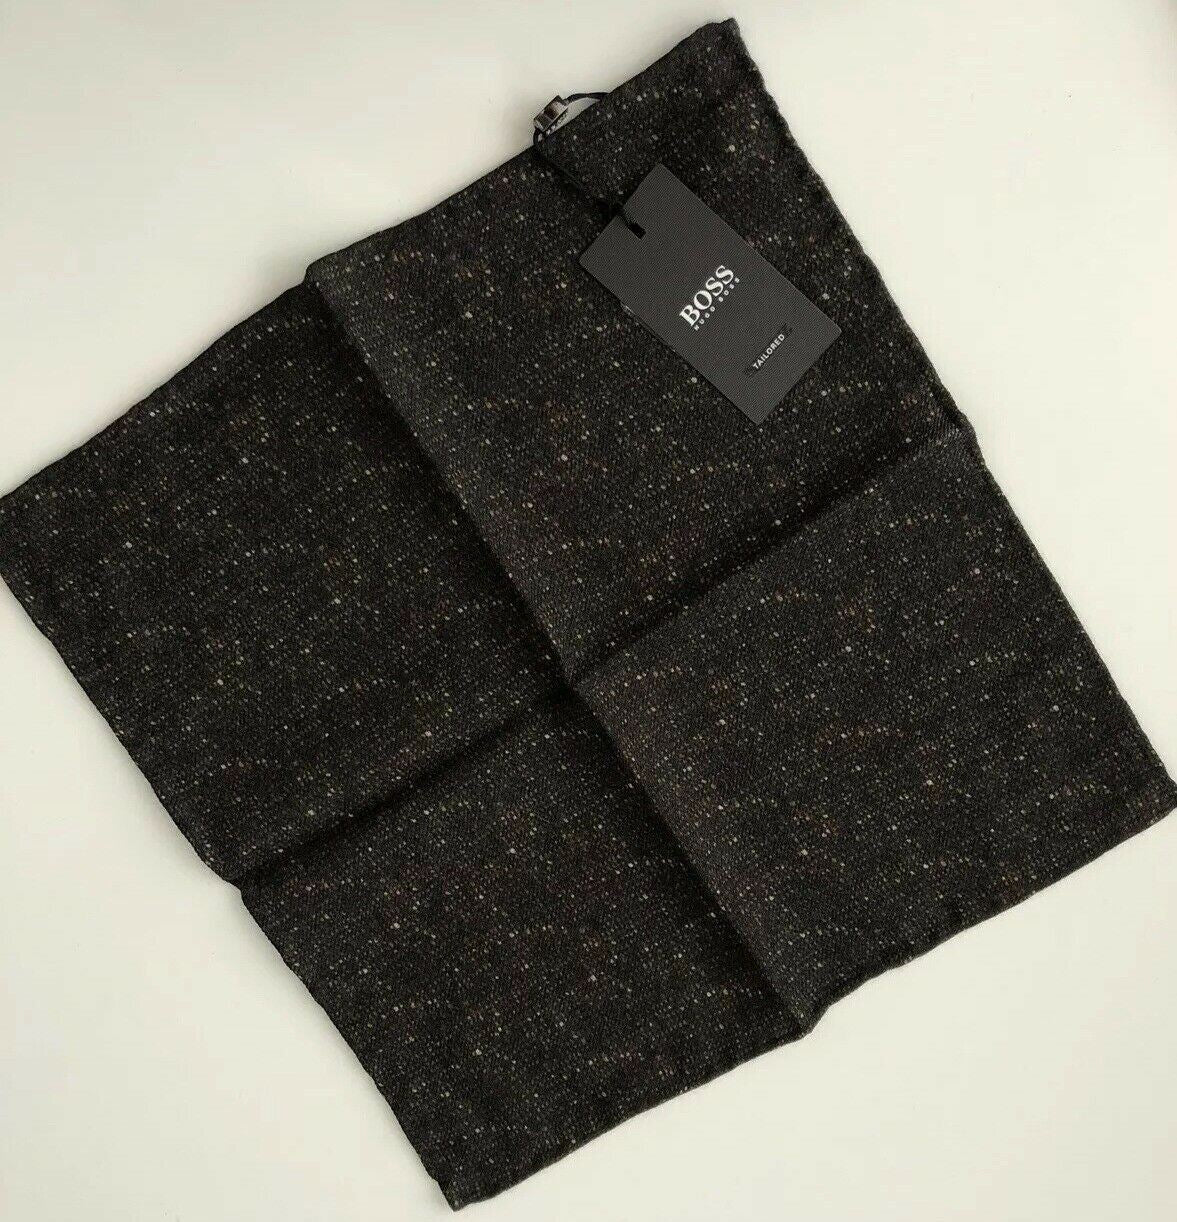 NIB HUGO BOSS Tailored Dark Brown T-Pocket Square 100% Wool Made in Italy